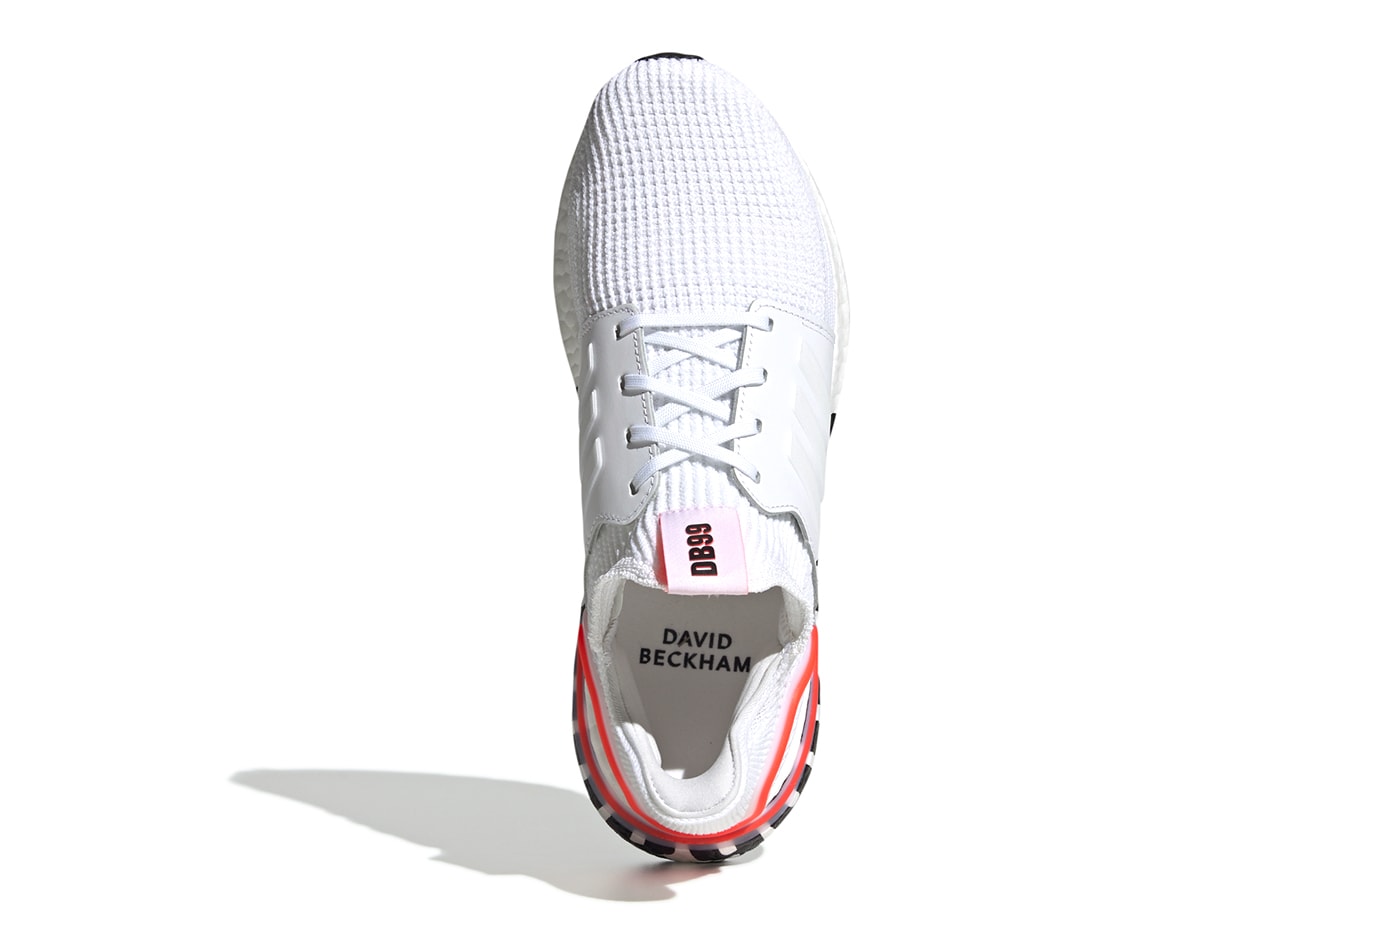 David Beckham x adidas Ultra Boost 2019 Release soccer footwear football MLS running shoe trainers kicks primeknit 